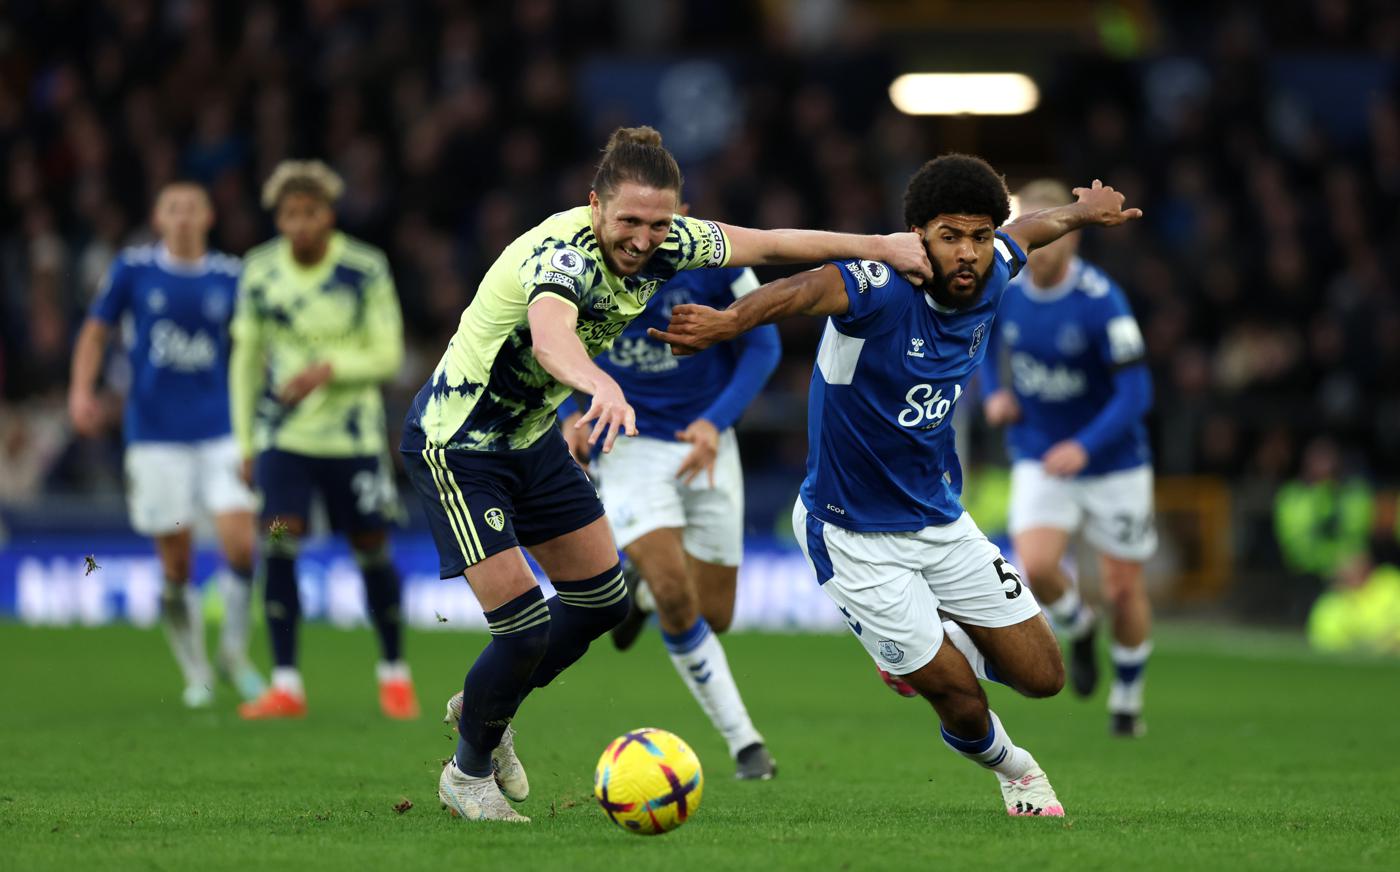 Everton - Leeds - 1:0. English Championship, round 24